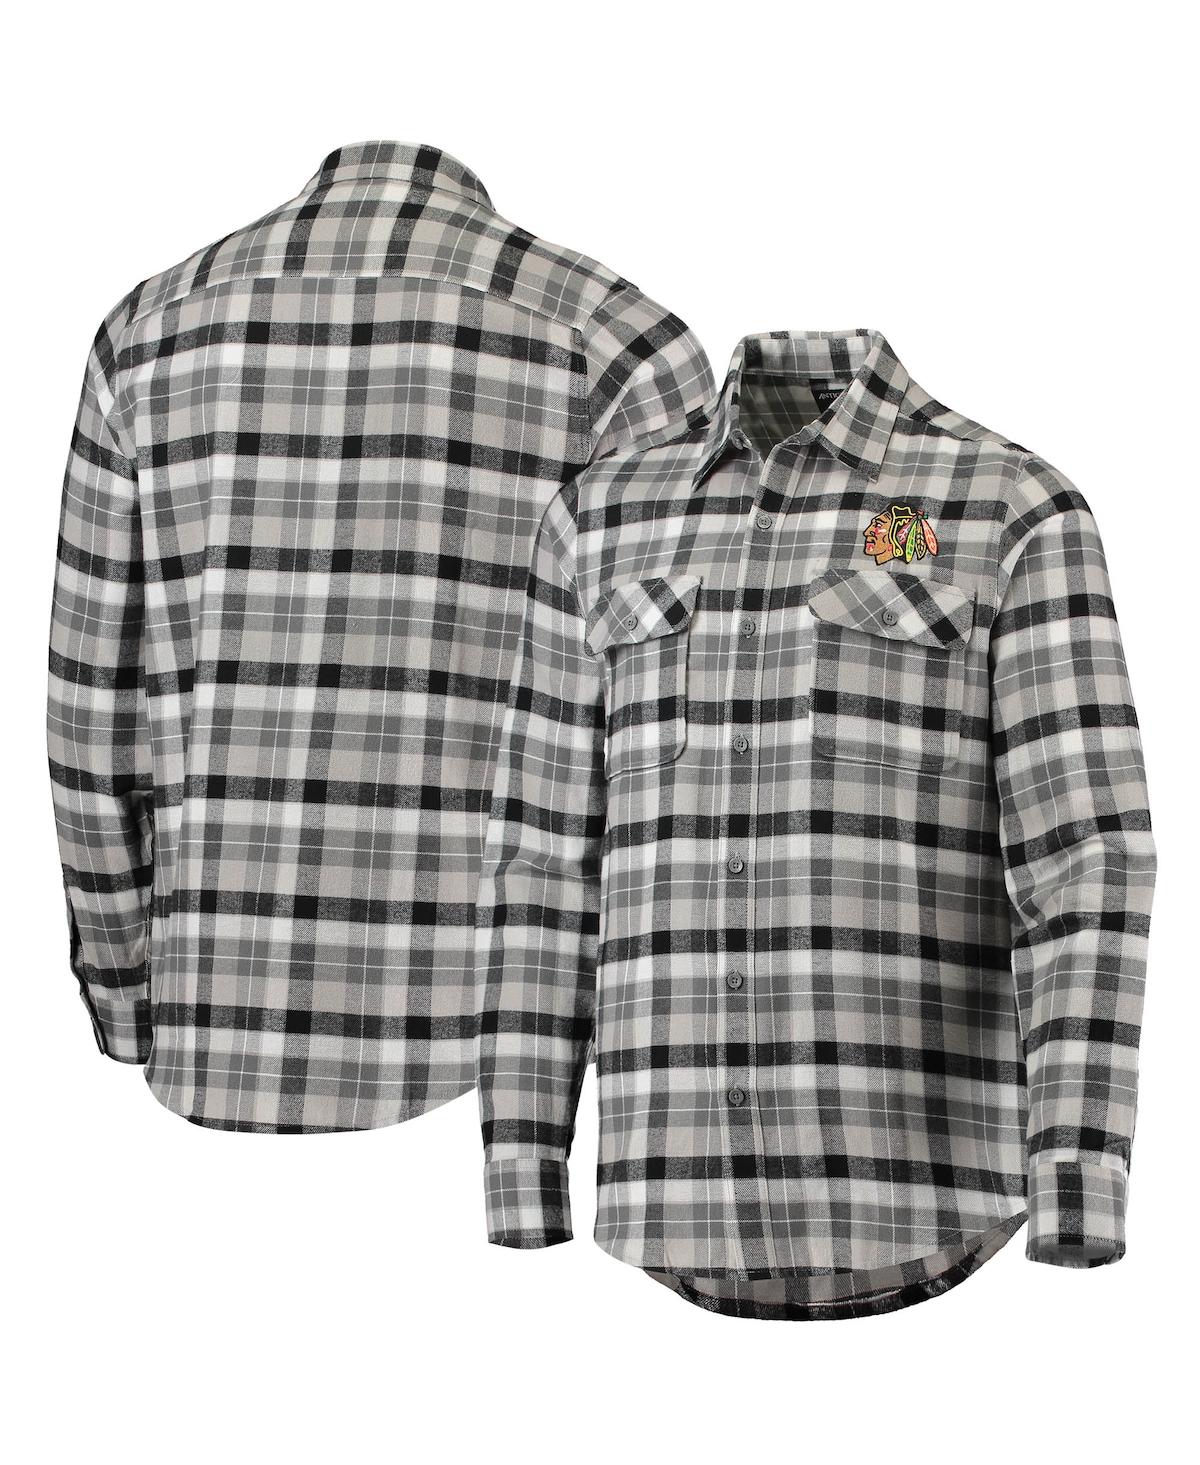 Men's Antigua Black and Gray Chicago Blackhawks Ease Plaid Button-Up Long Sleeve Shirt - Black, Gray